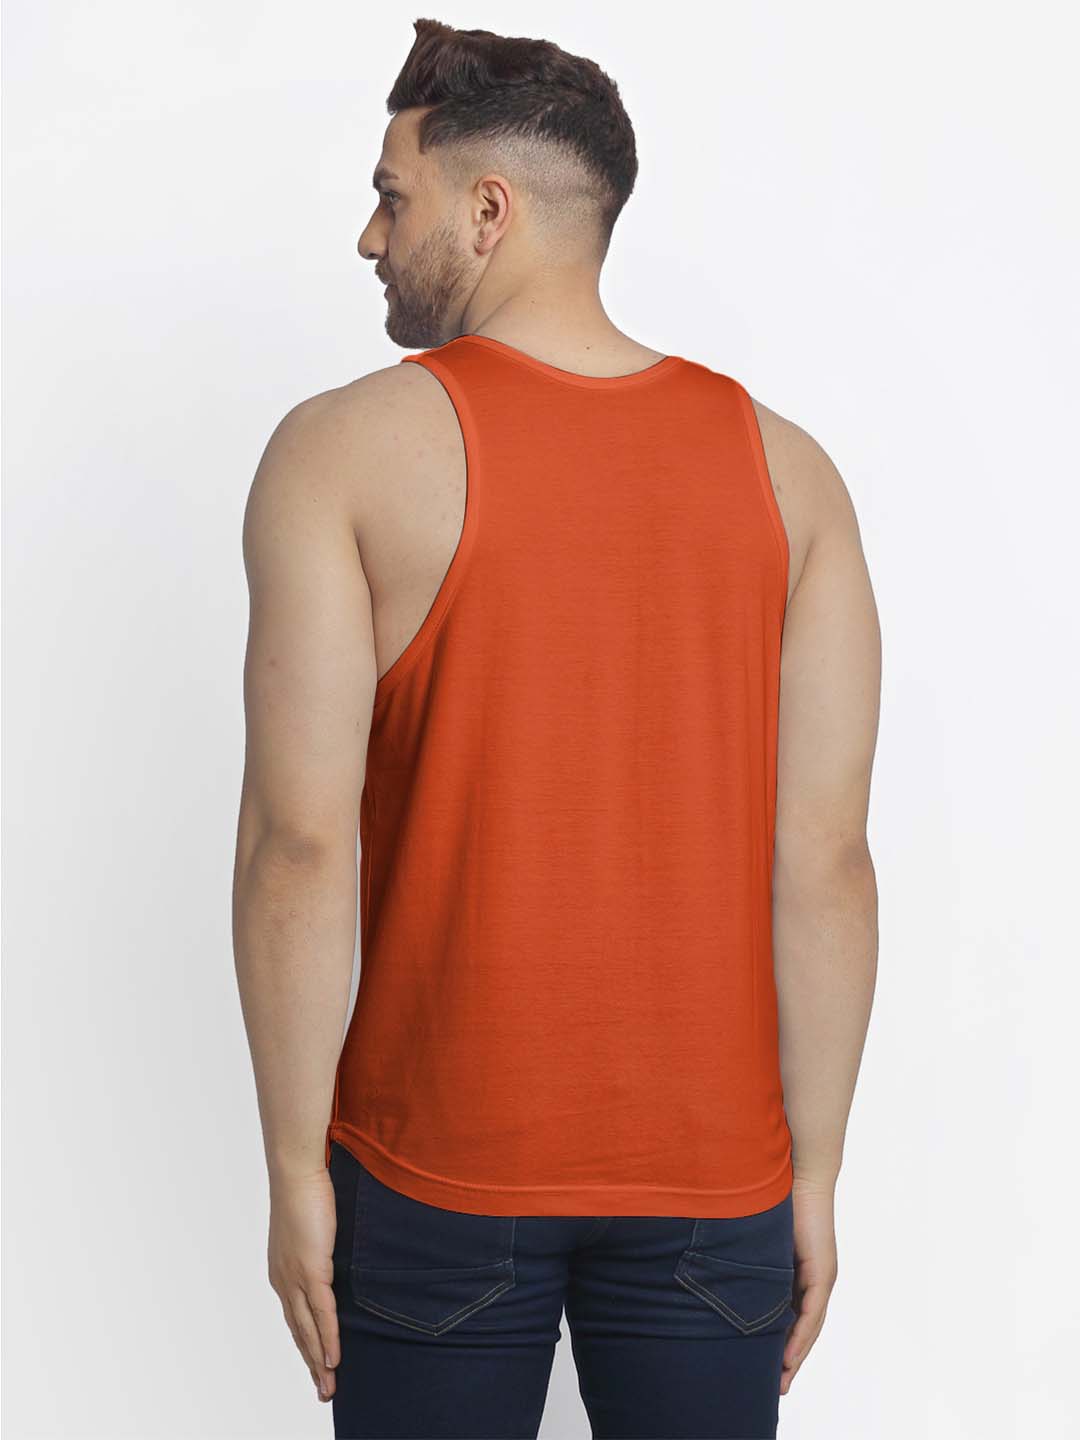 Mens's Gym Printed Innerwear Gym Vest - Friskers